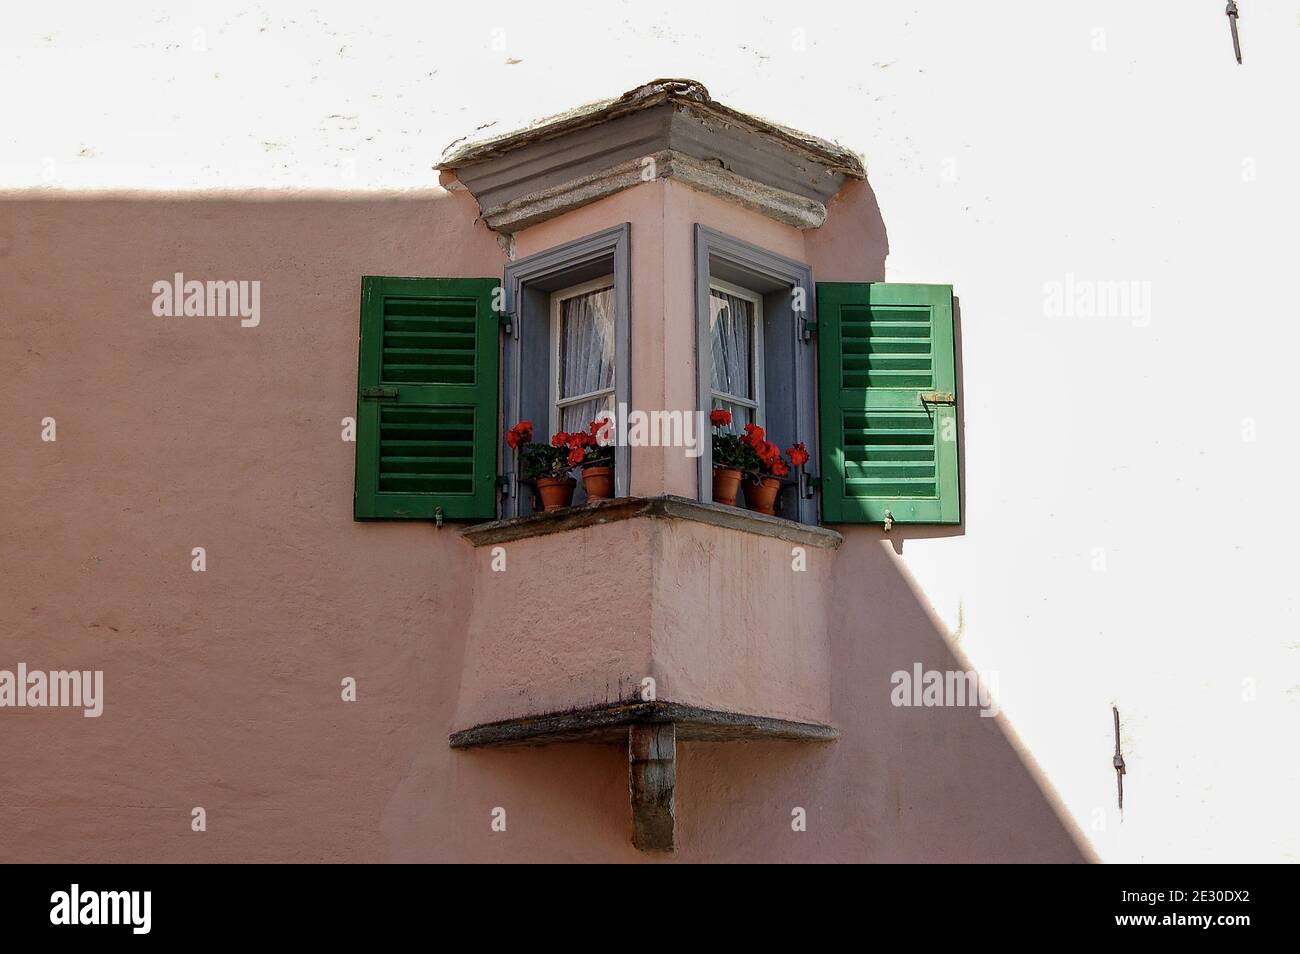 Small old balcony with wooden windows and red geraniums in the small town of Tirano, Italian Alps, Valtellina, Sondrio province, Lombardy, Italy, Eu. Stock Photo